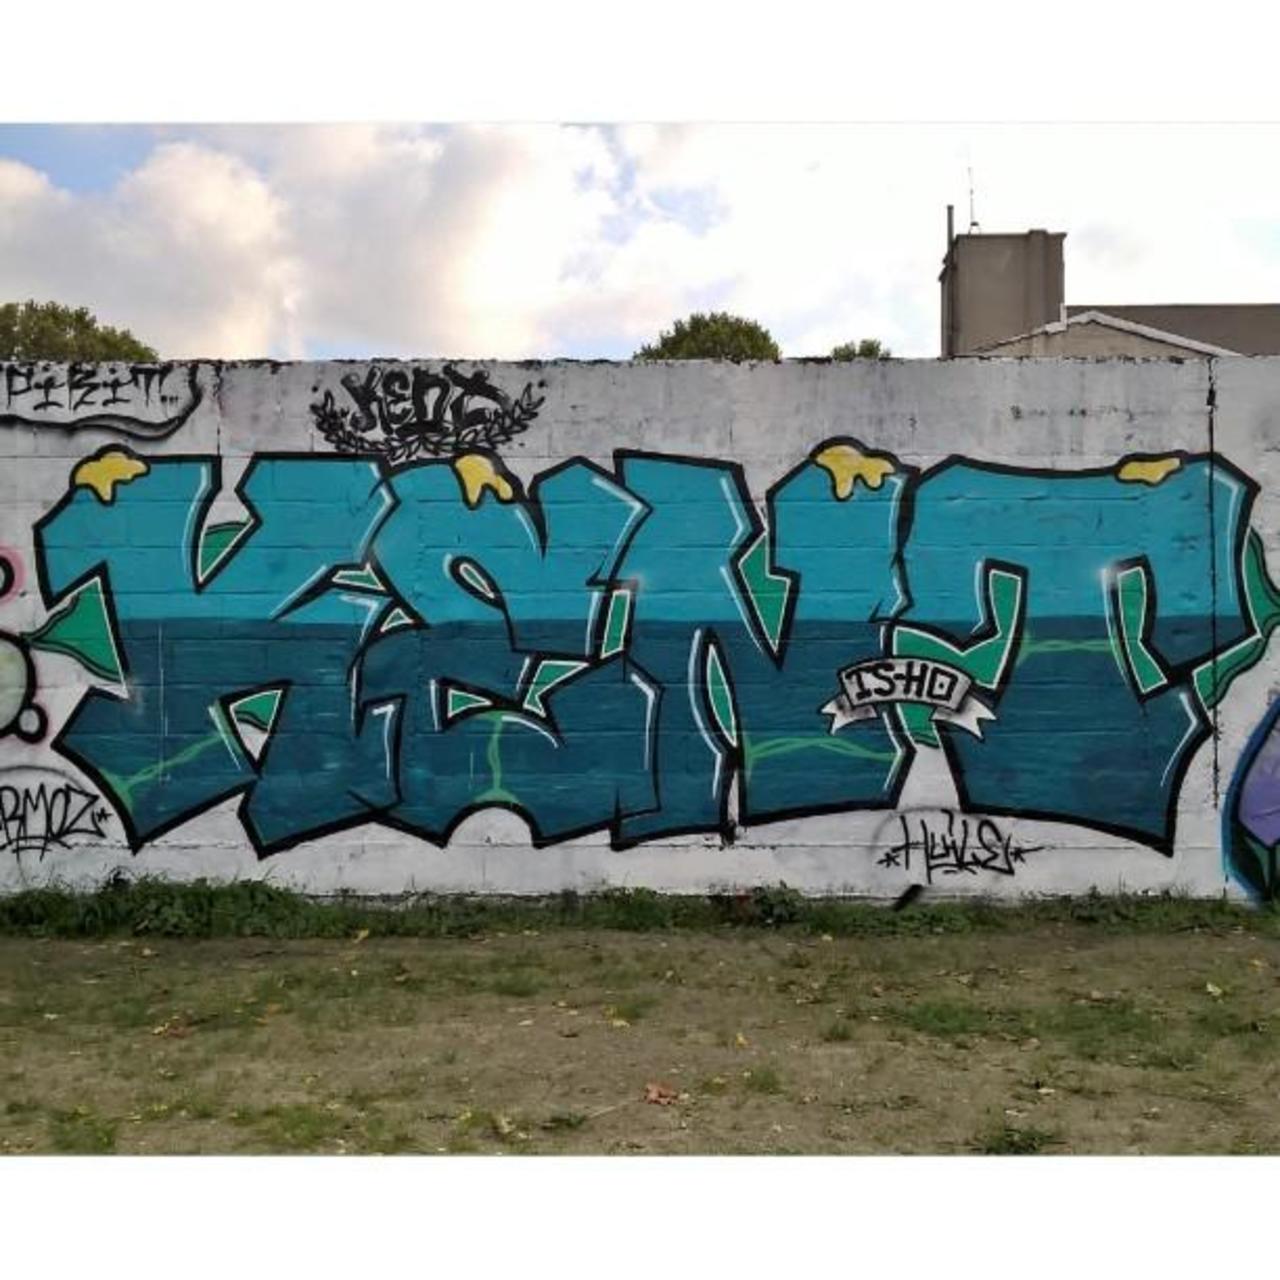 KENT
#TSHO #streetart #graffiti #graff #art #fatcap #bombing #sprayart #spraycanart #wallart #handstyle #lettering … http://t.co/KnRTRsc8Sn